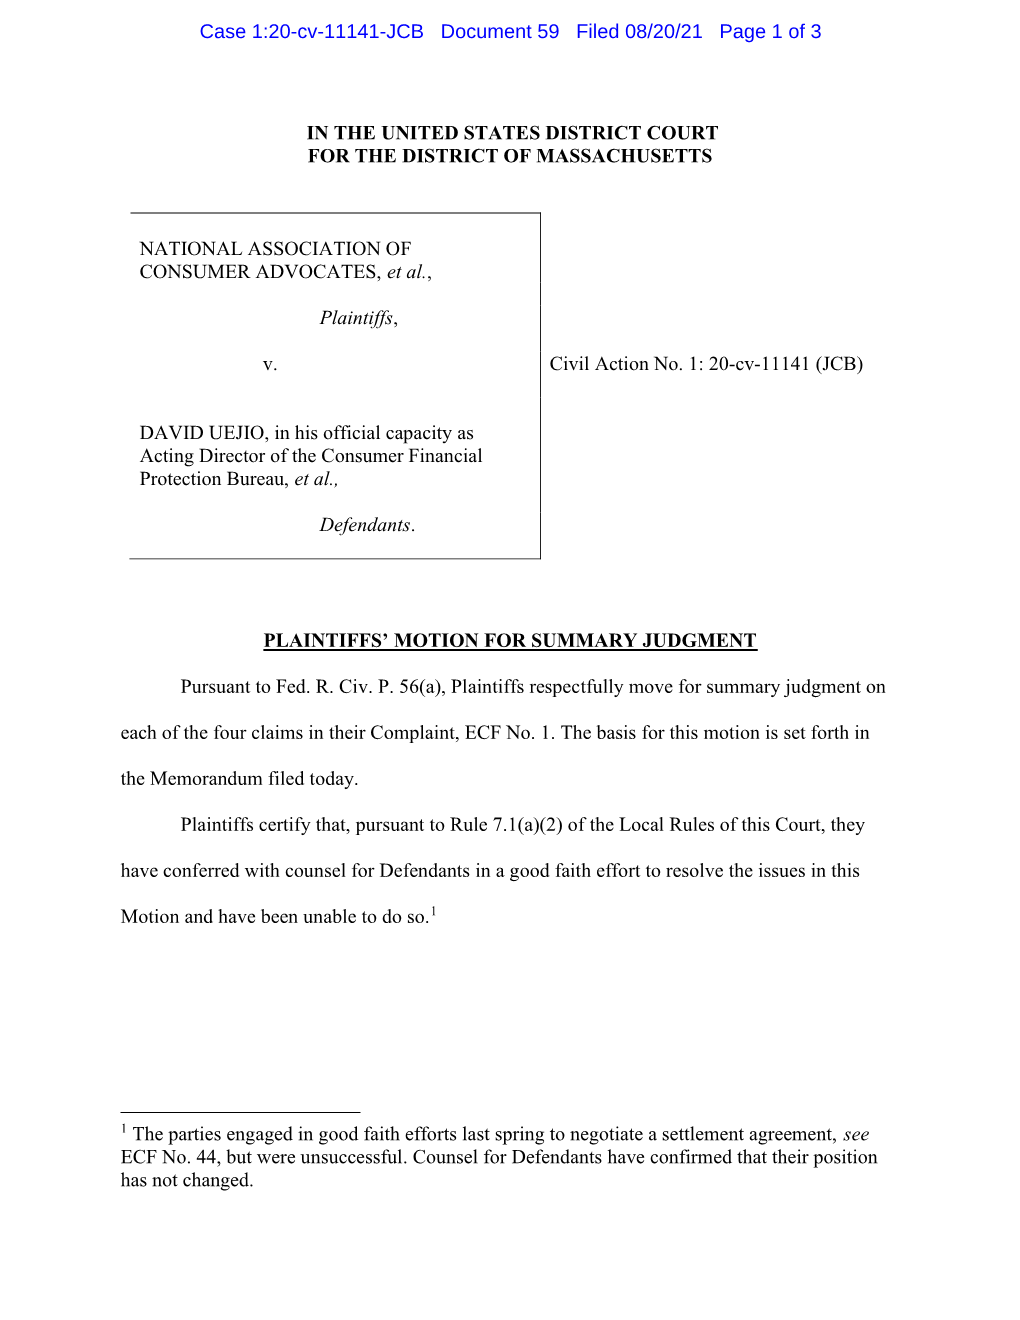 Case 1:20-Cv-11141-JCB Document 59 Filed 08/20/21 Page 1 of 3